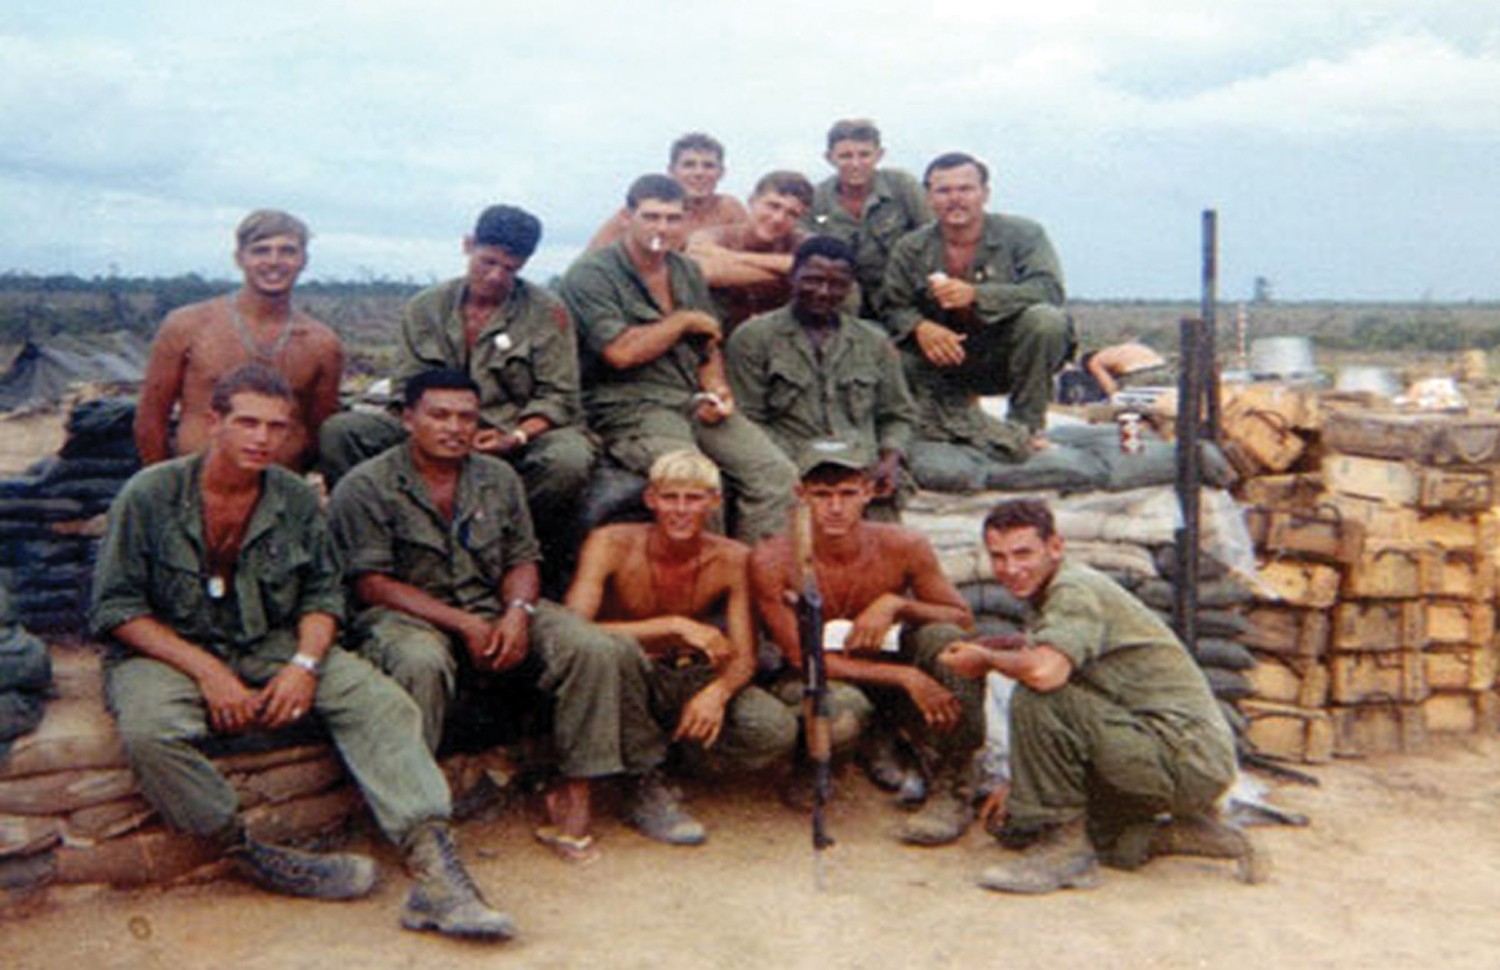 Vietnam Veterans Honored in the VetFriends.com Vietnam Era Photo